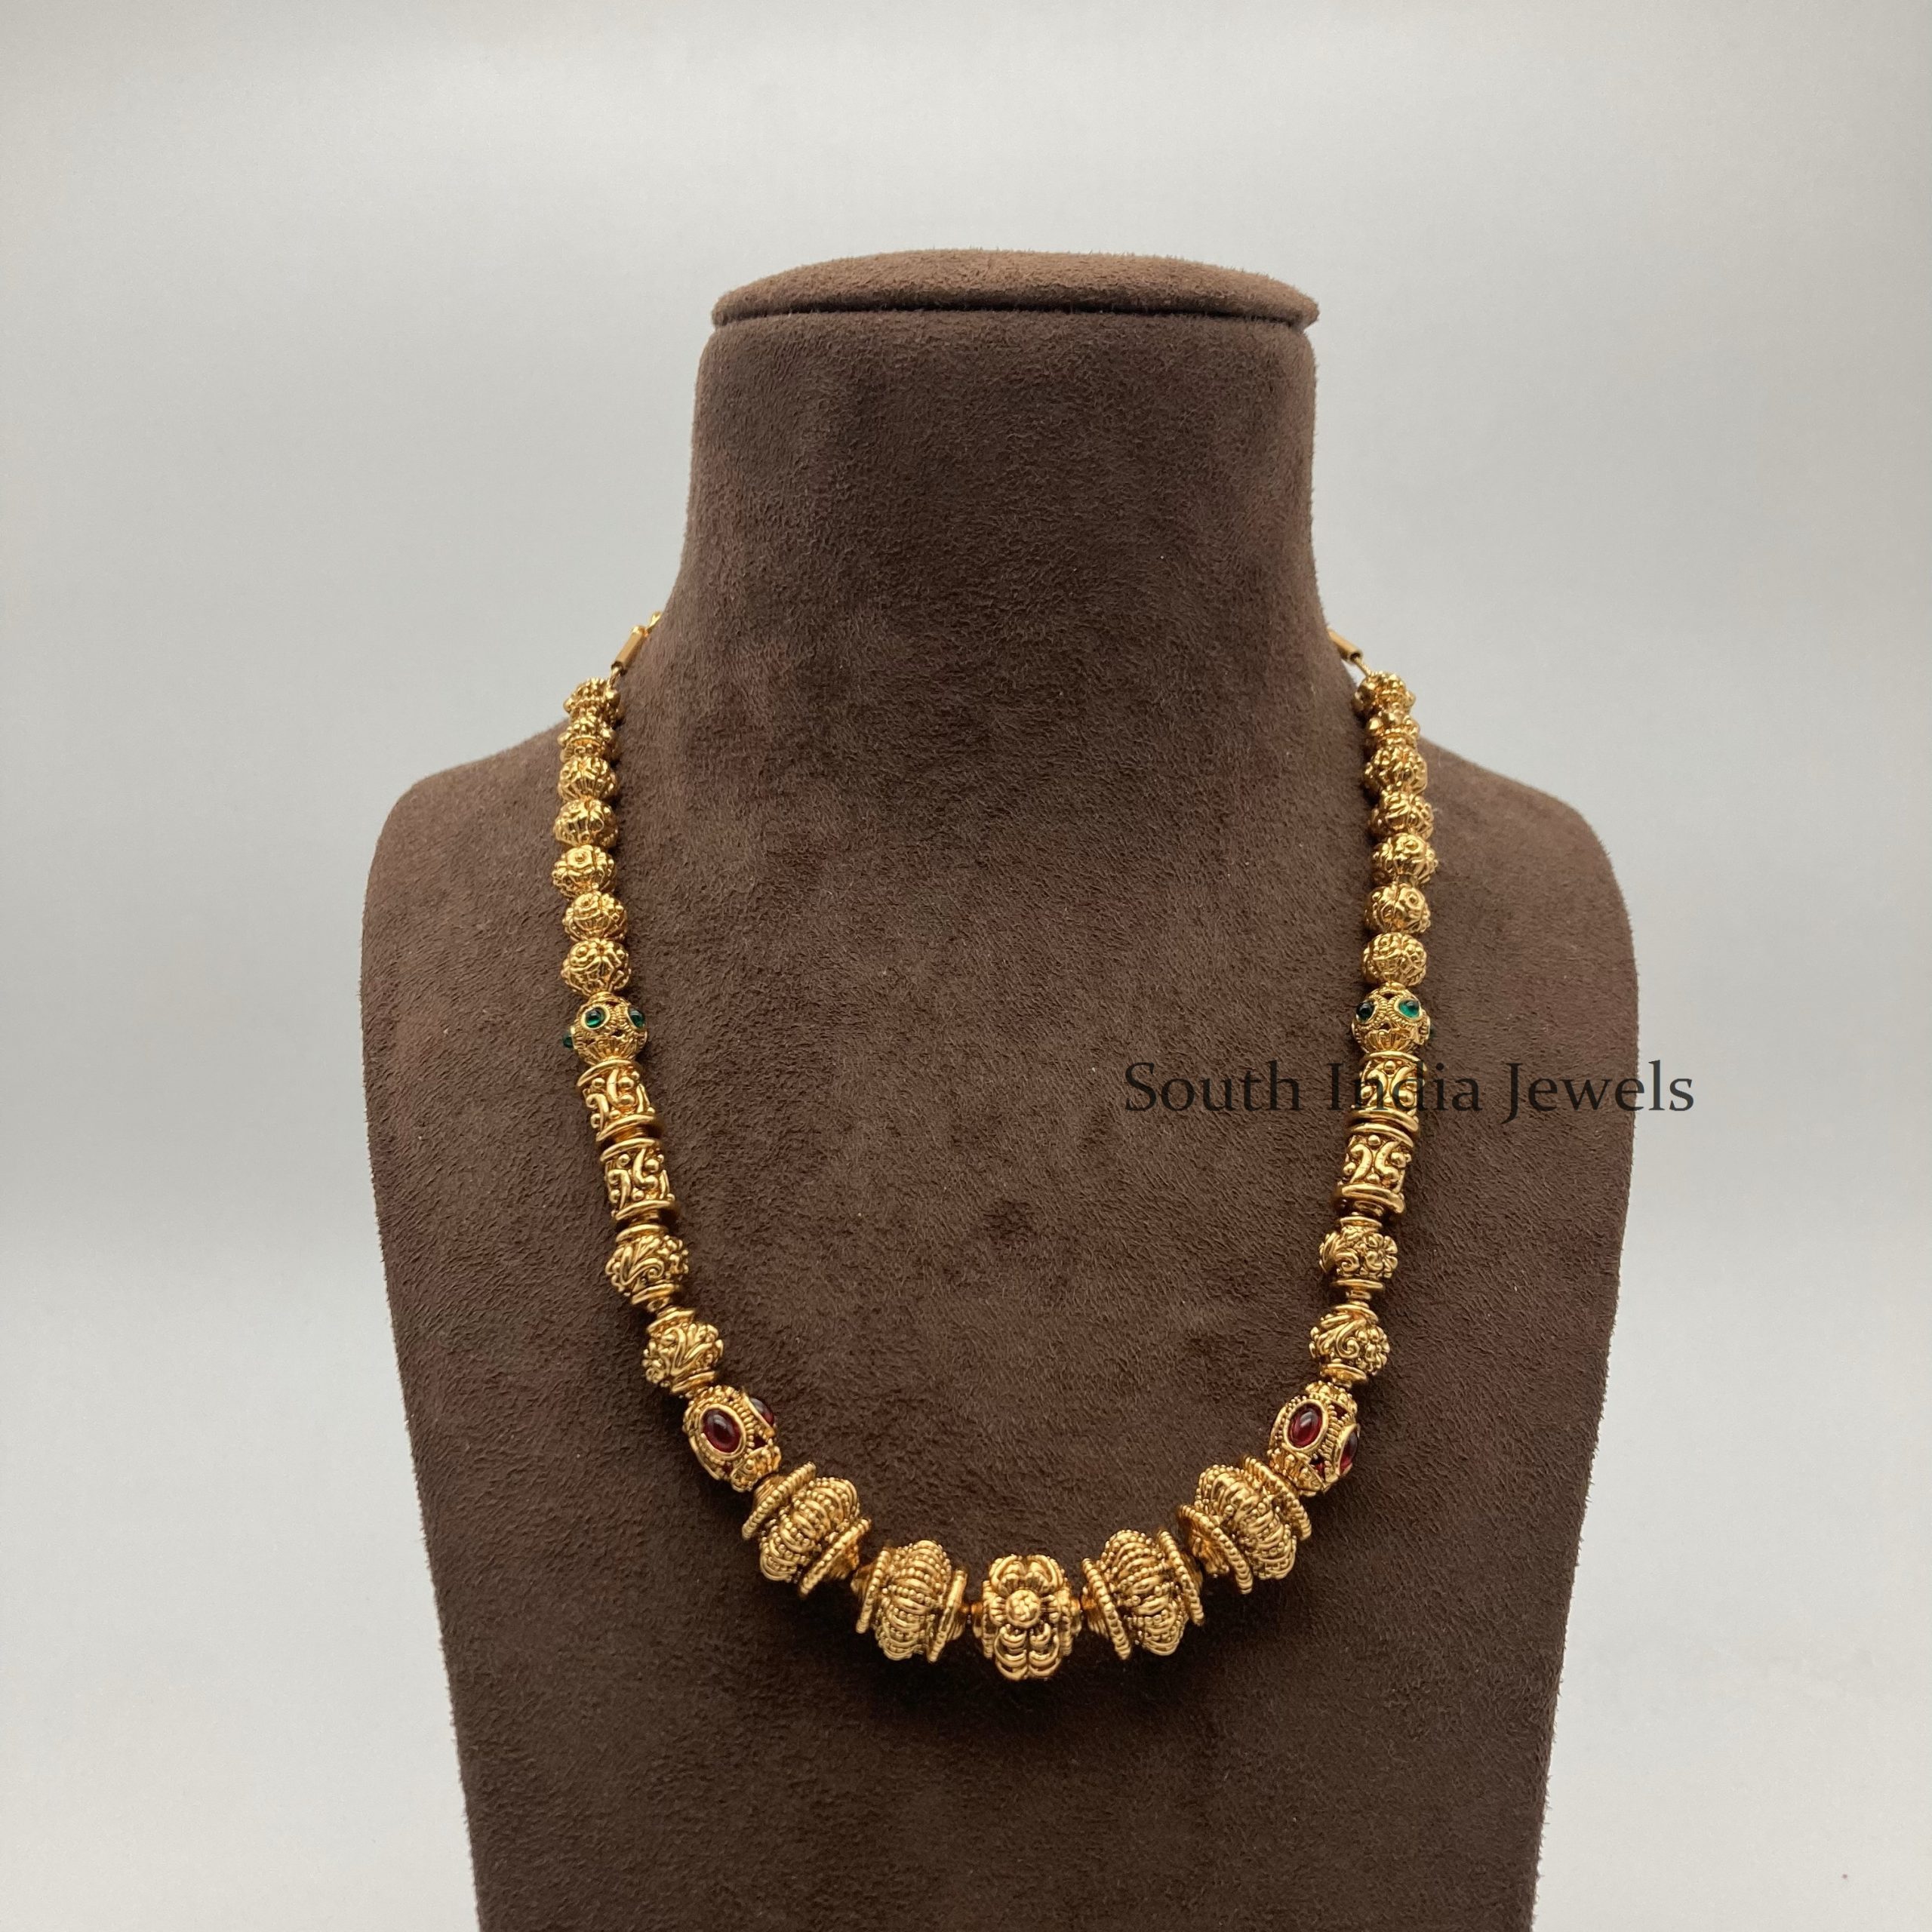 98% Golden Jodha Akbar Thushi Gold Necklace at Rs 5494/gram in Kolhapur |  ID: 2849516844112